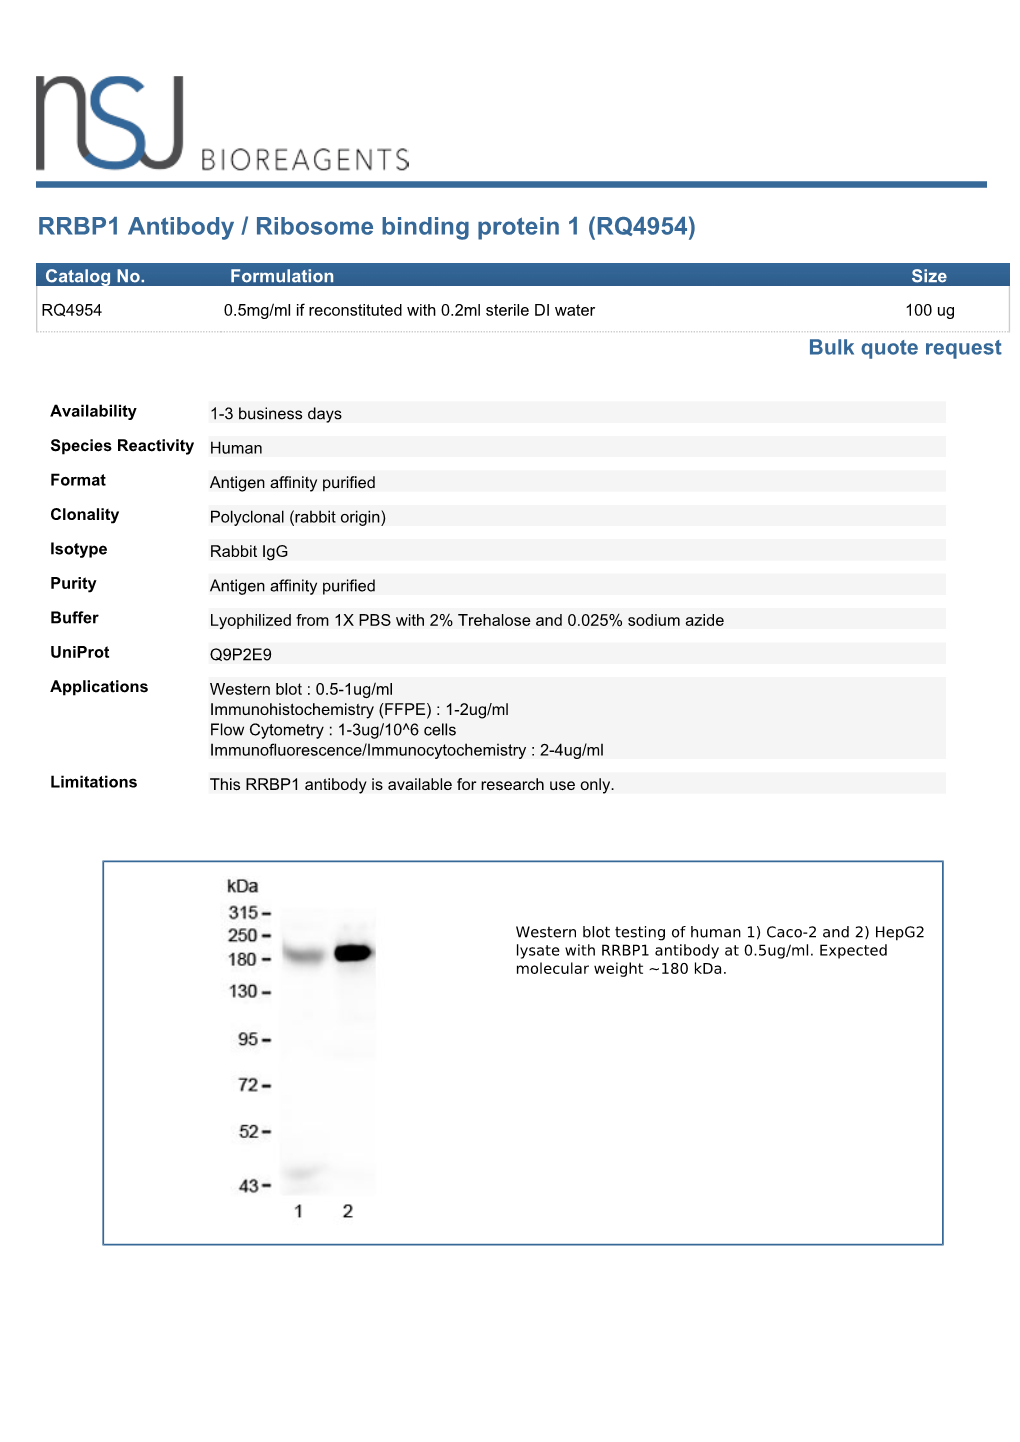 RRBP1 Antibody / Ribosome Binding Protein 1 (RQ4954)